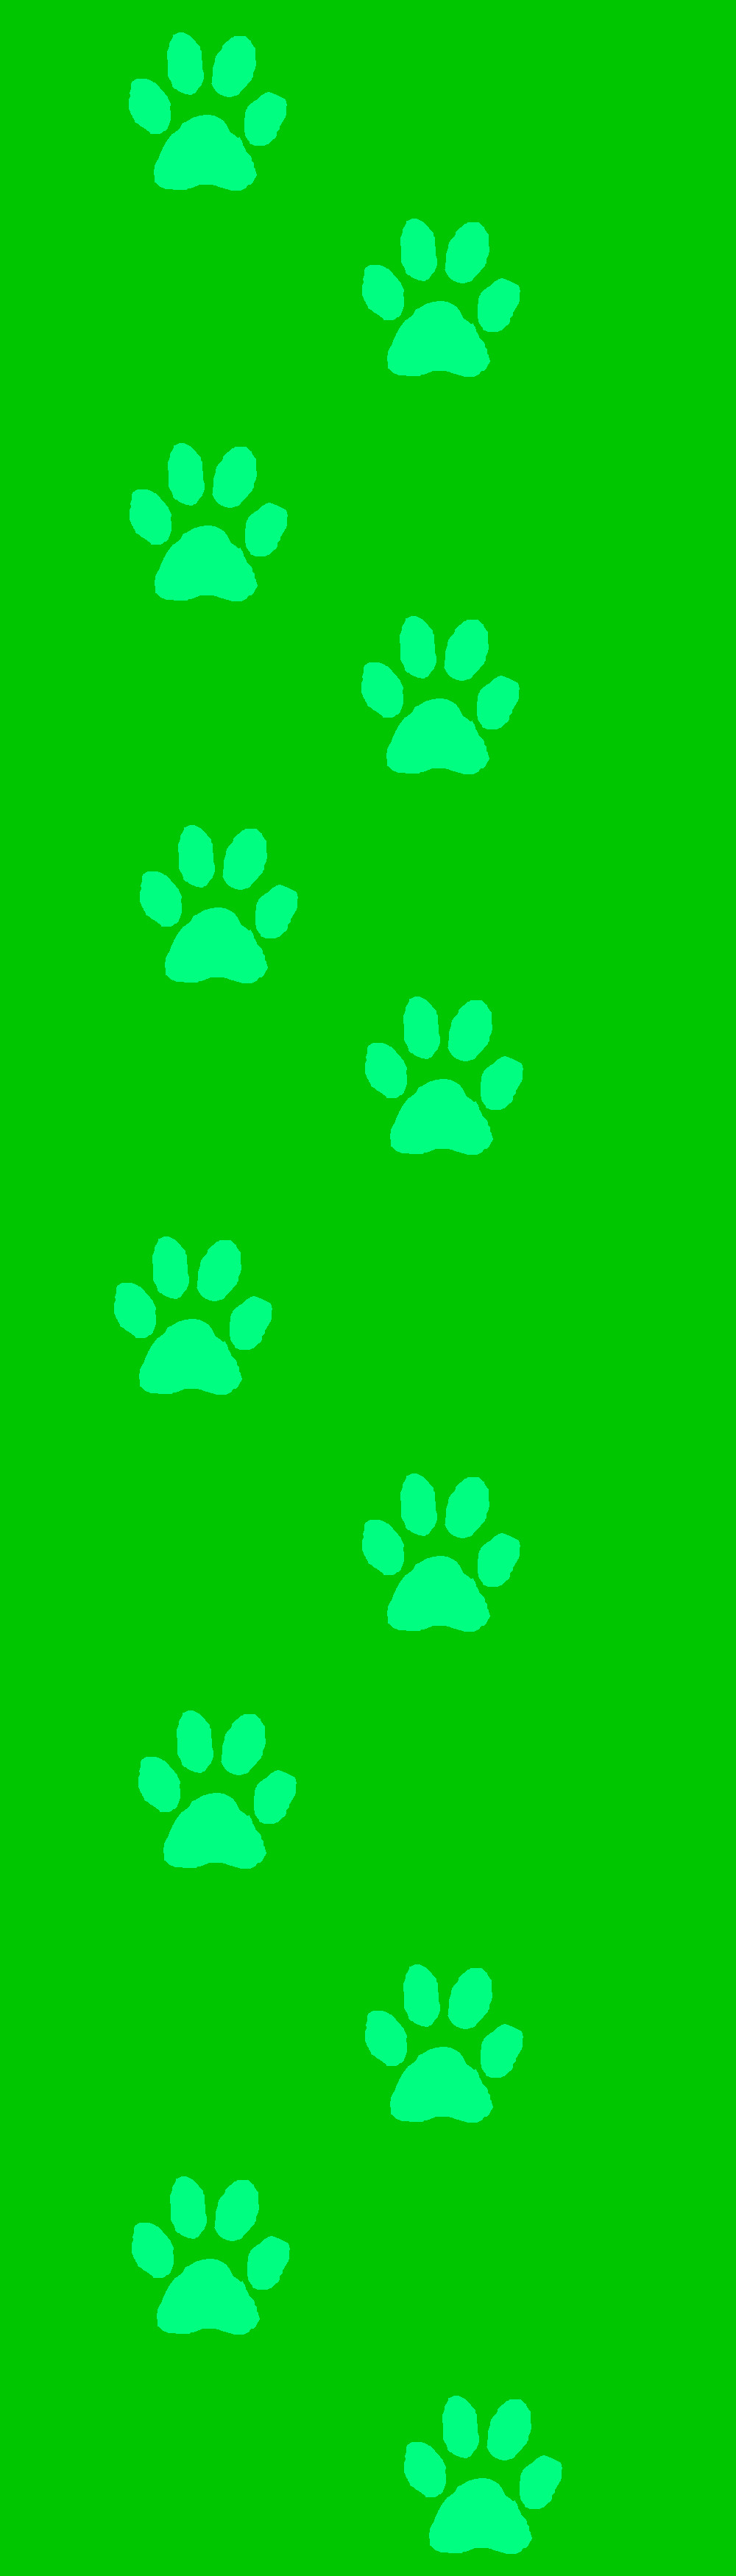 Green Dog Paw Print Custom Box Background By Kawaii 0kami On